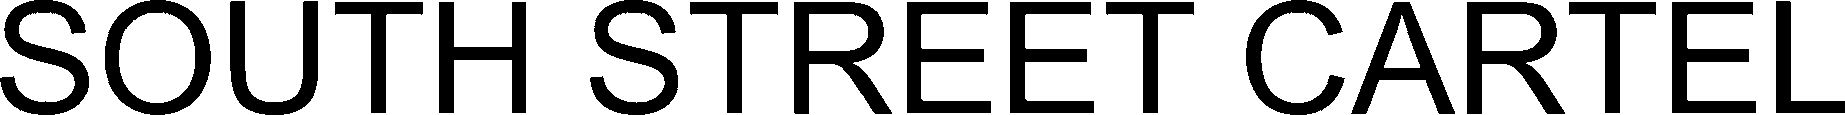 Trademark Logo SOUTH STREET CARTEL